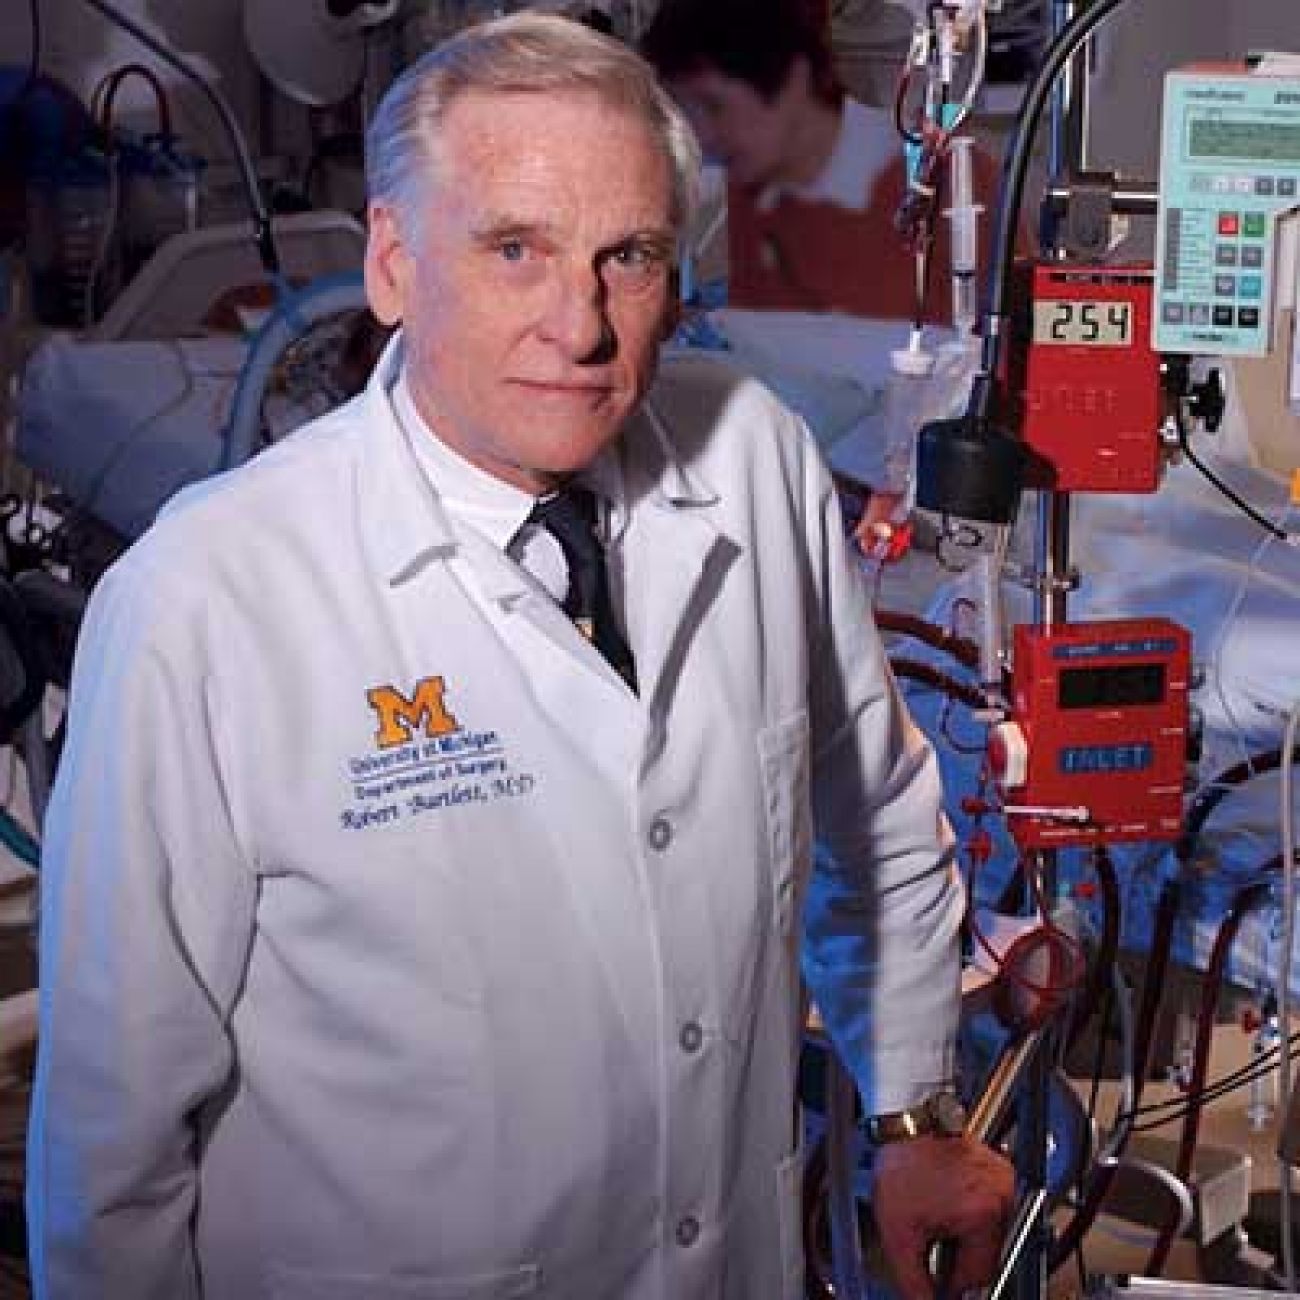 Dr. Robert Bartlett with medical technology behind him